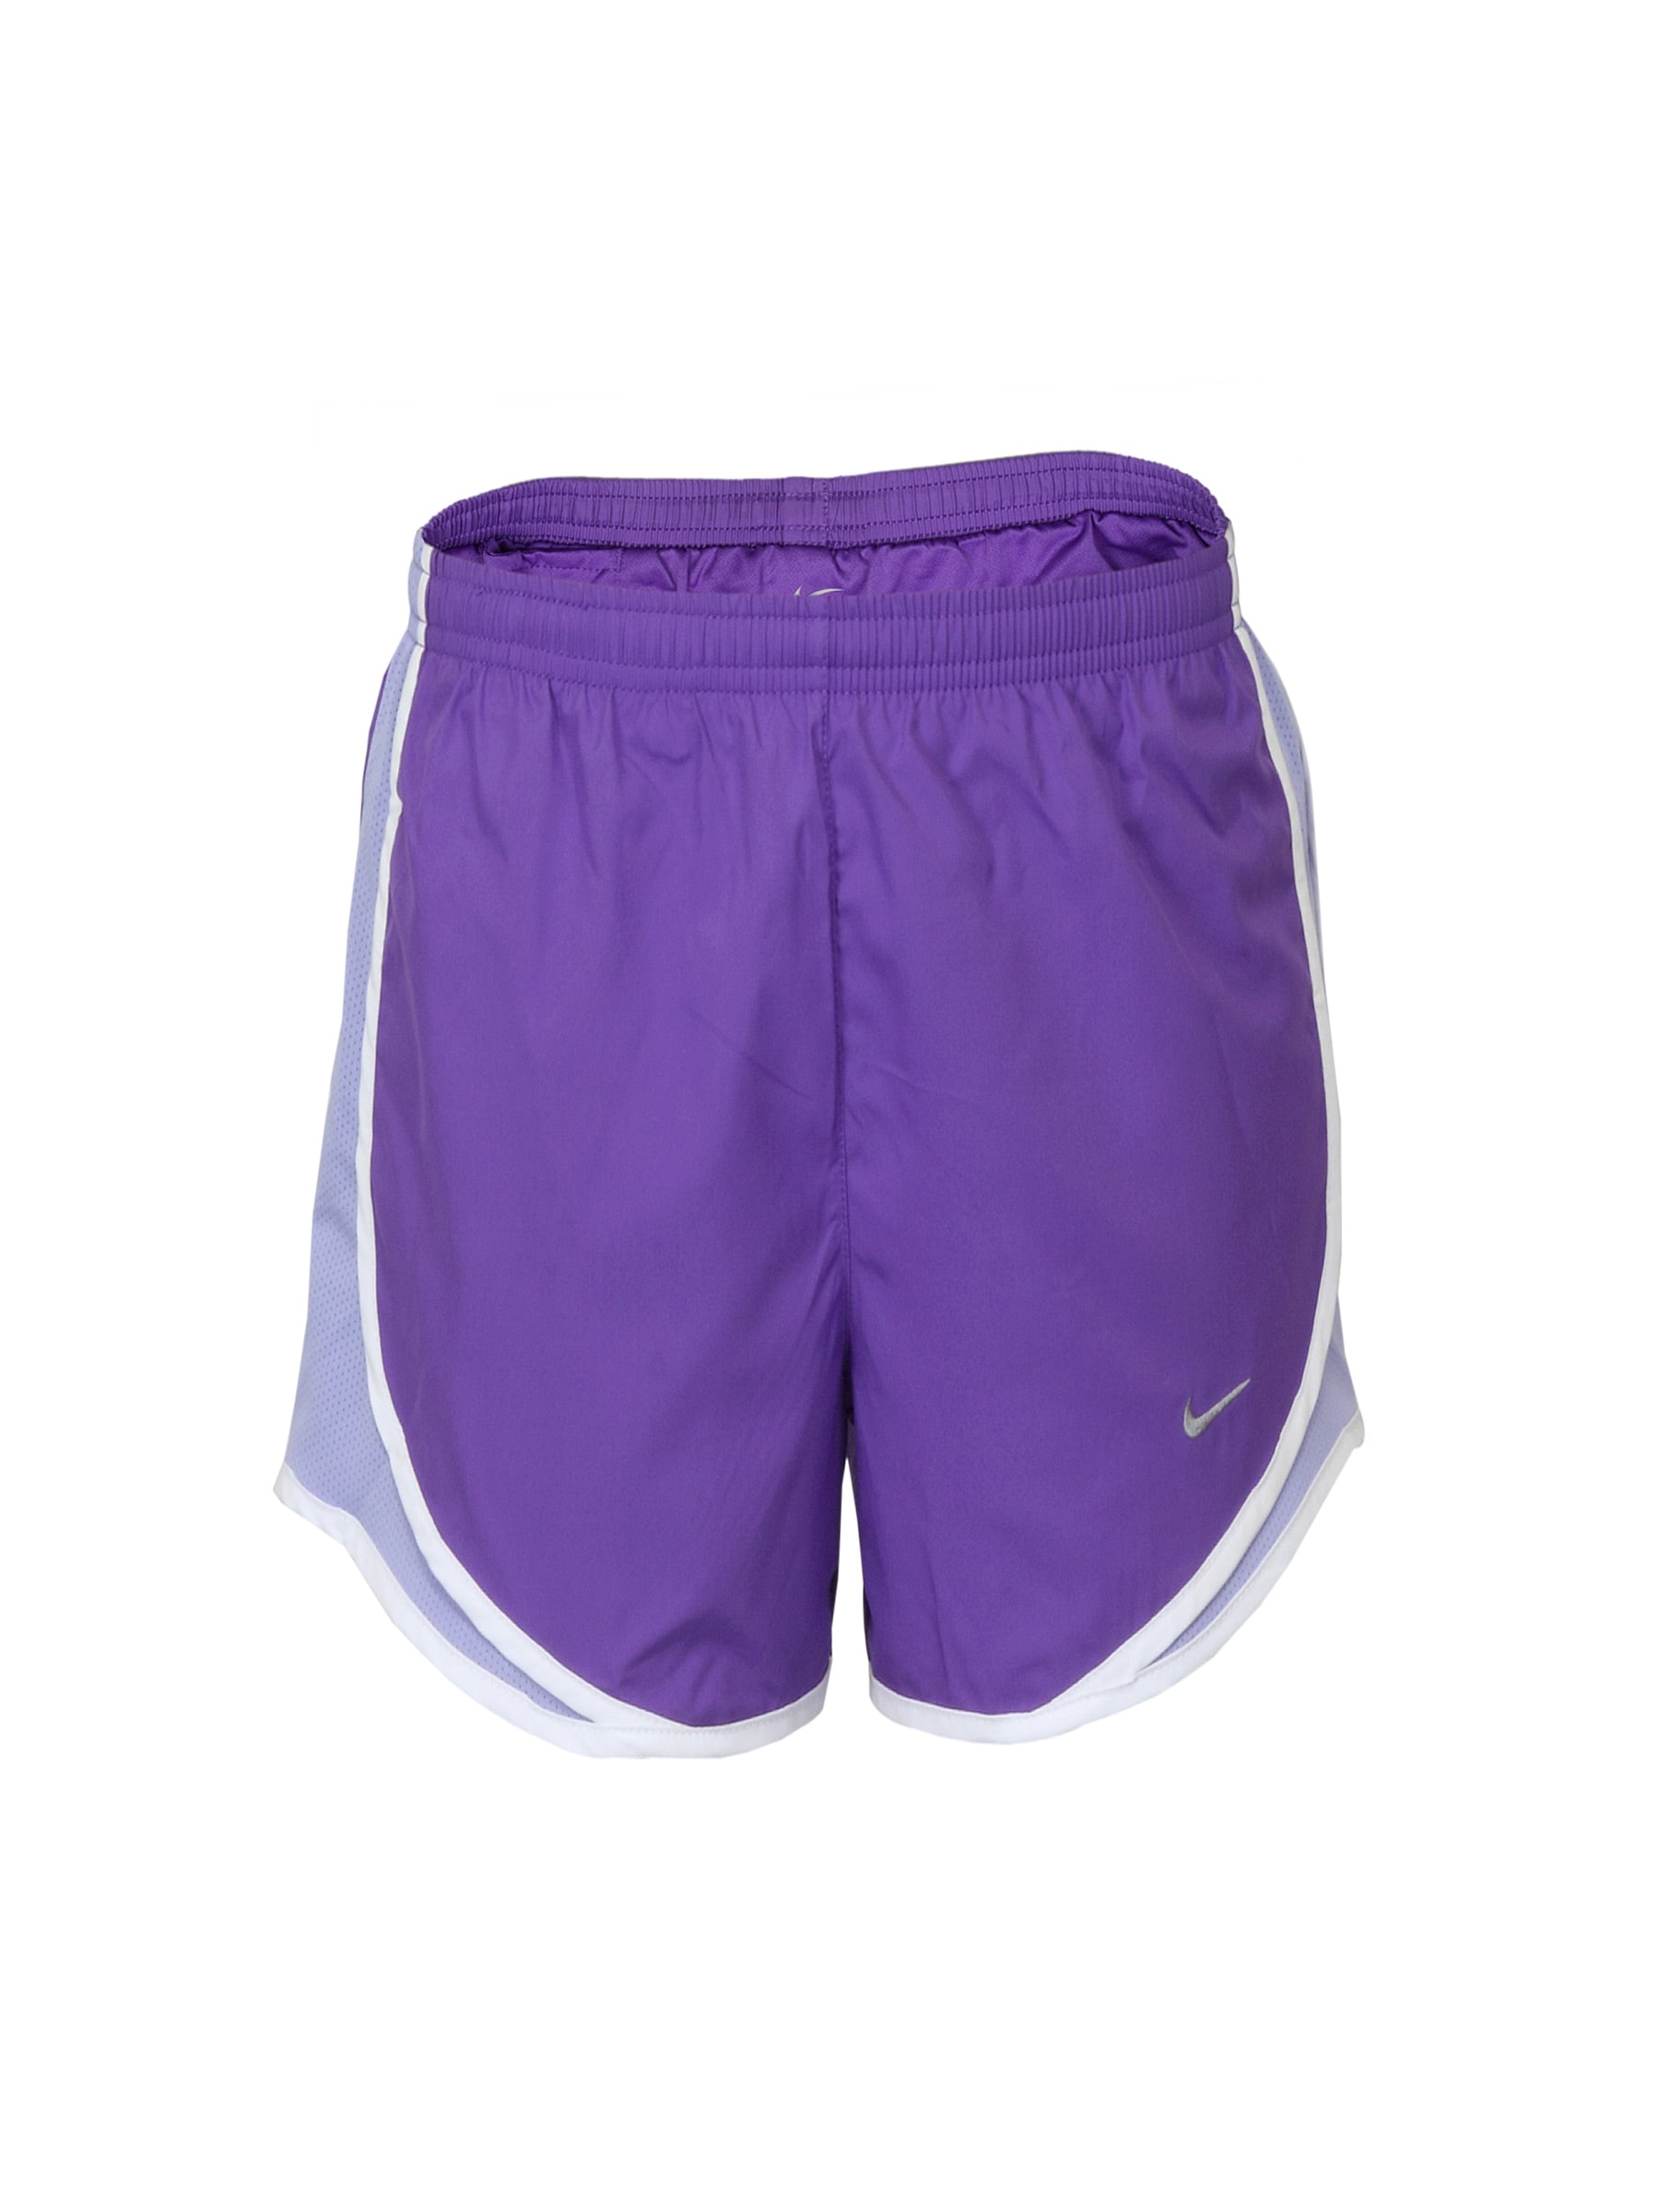 Nike Women Tempo Purple Shorts